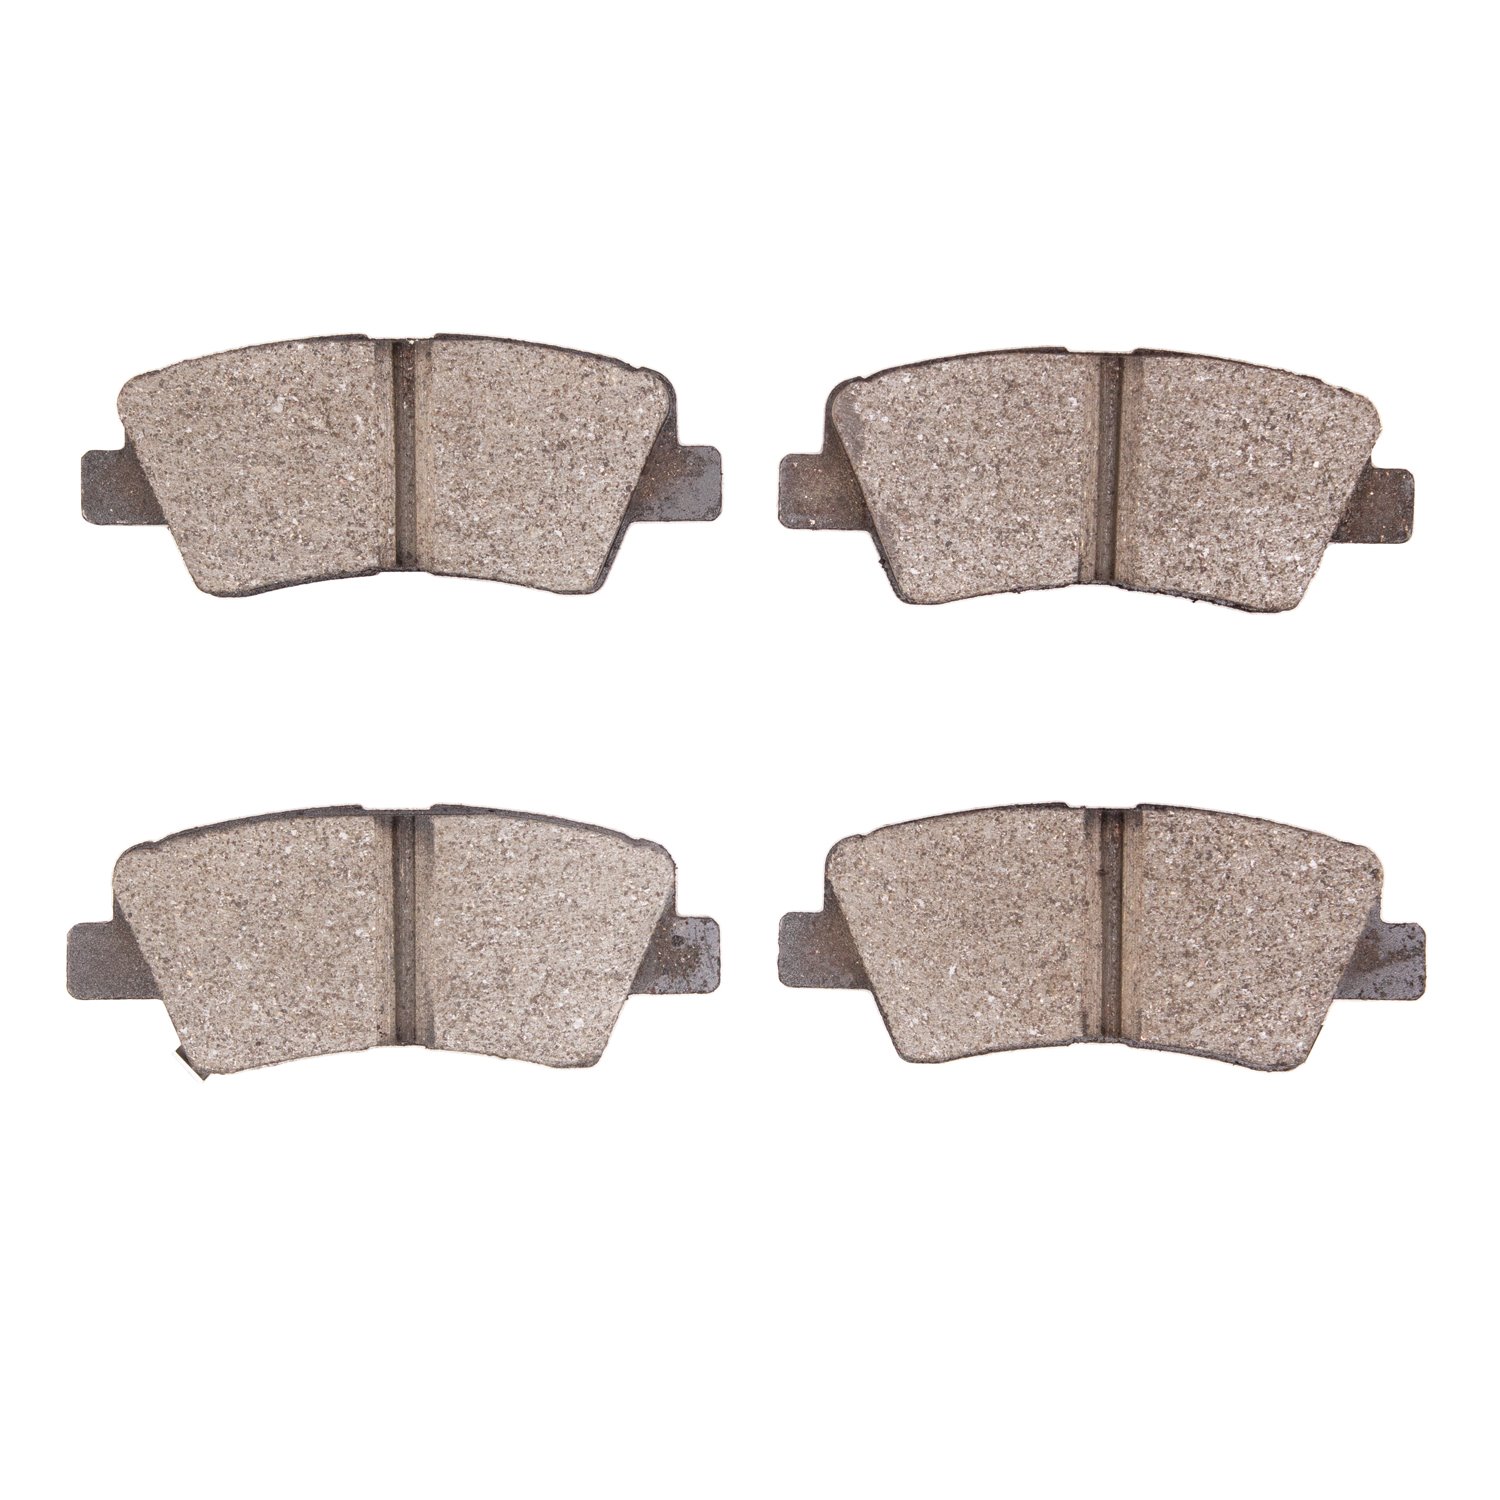 1310-2098-00 3000-Series Ceramic Brake Pads, Fits Select Kia/Hyundai/Genesis, Position: Rear